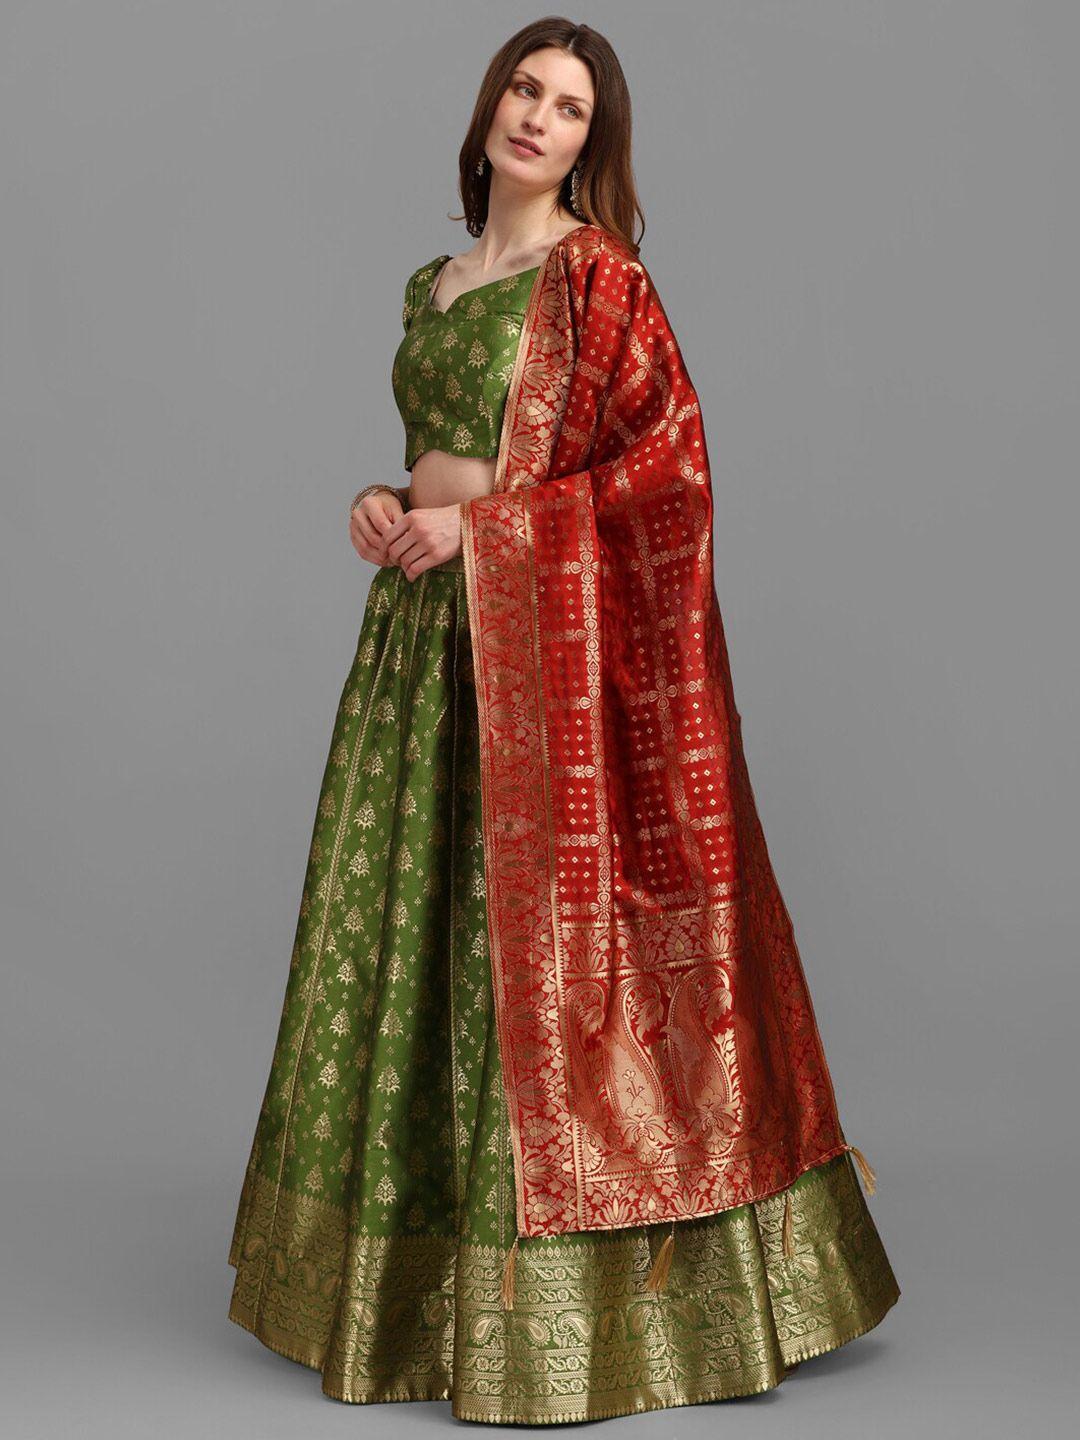 purvaja olive green & red semi-stitched lehenga & unstitched blouse with dupatta